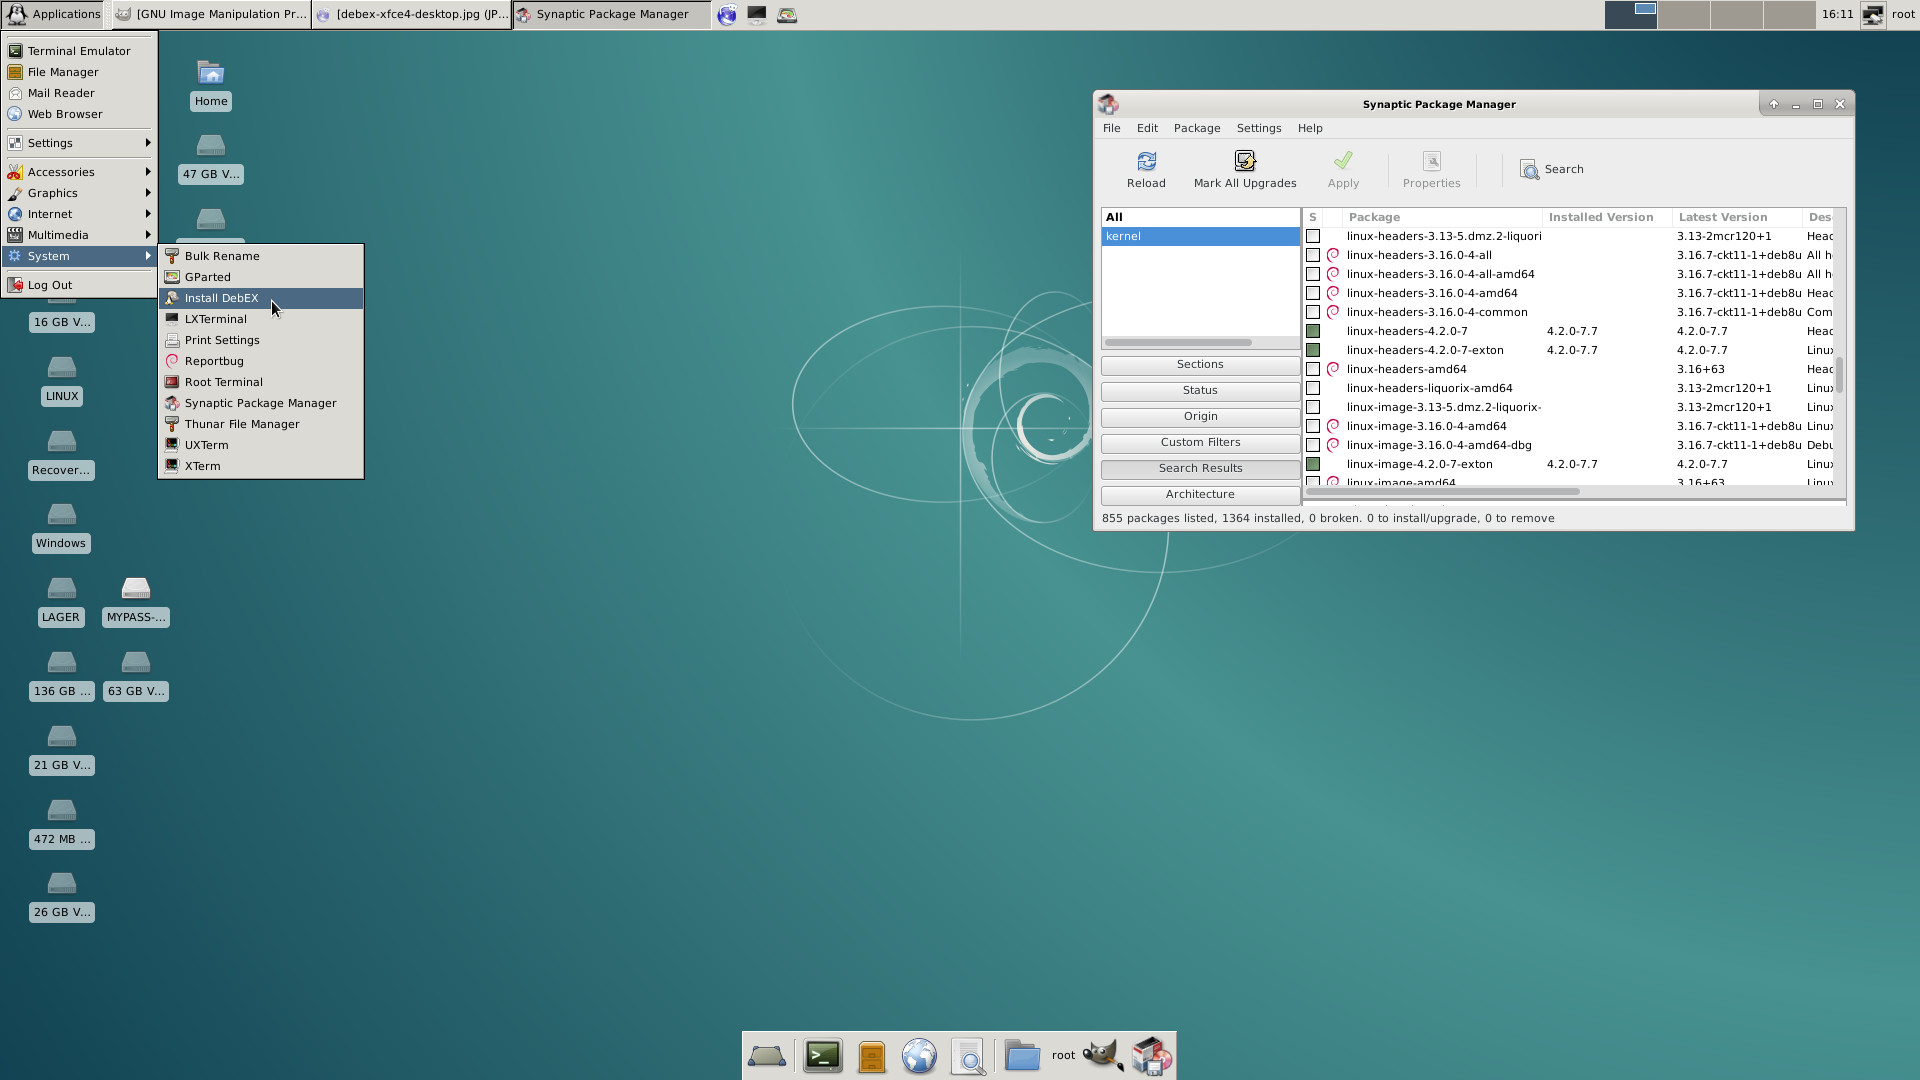 debex-xfce4-desktop.jpg